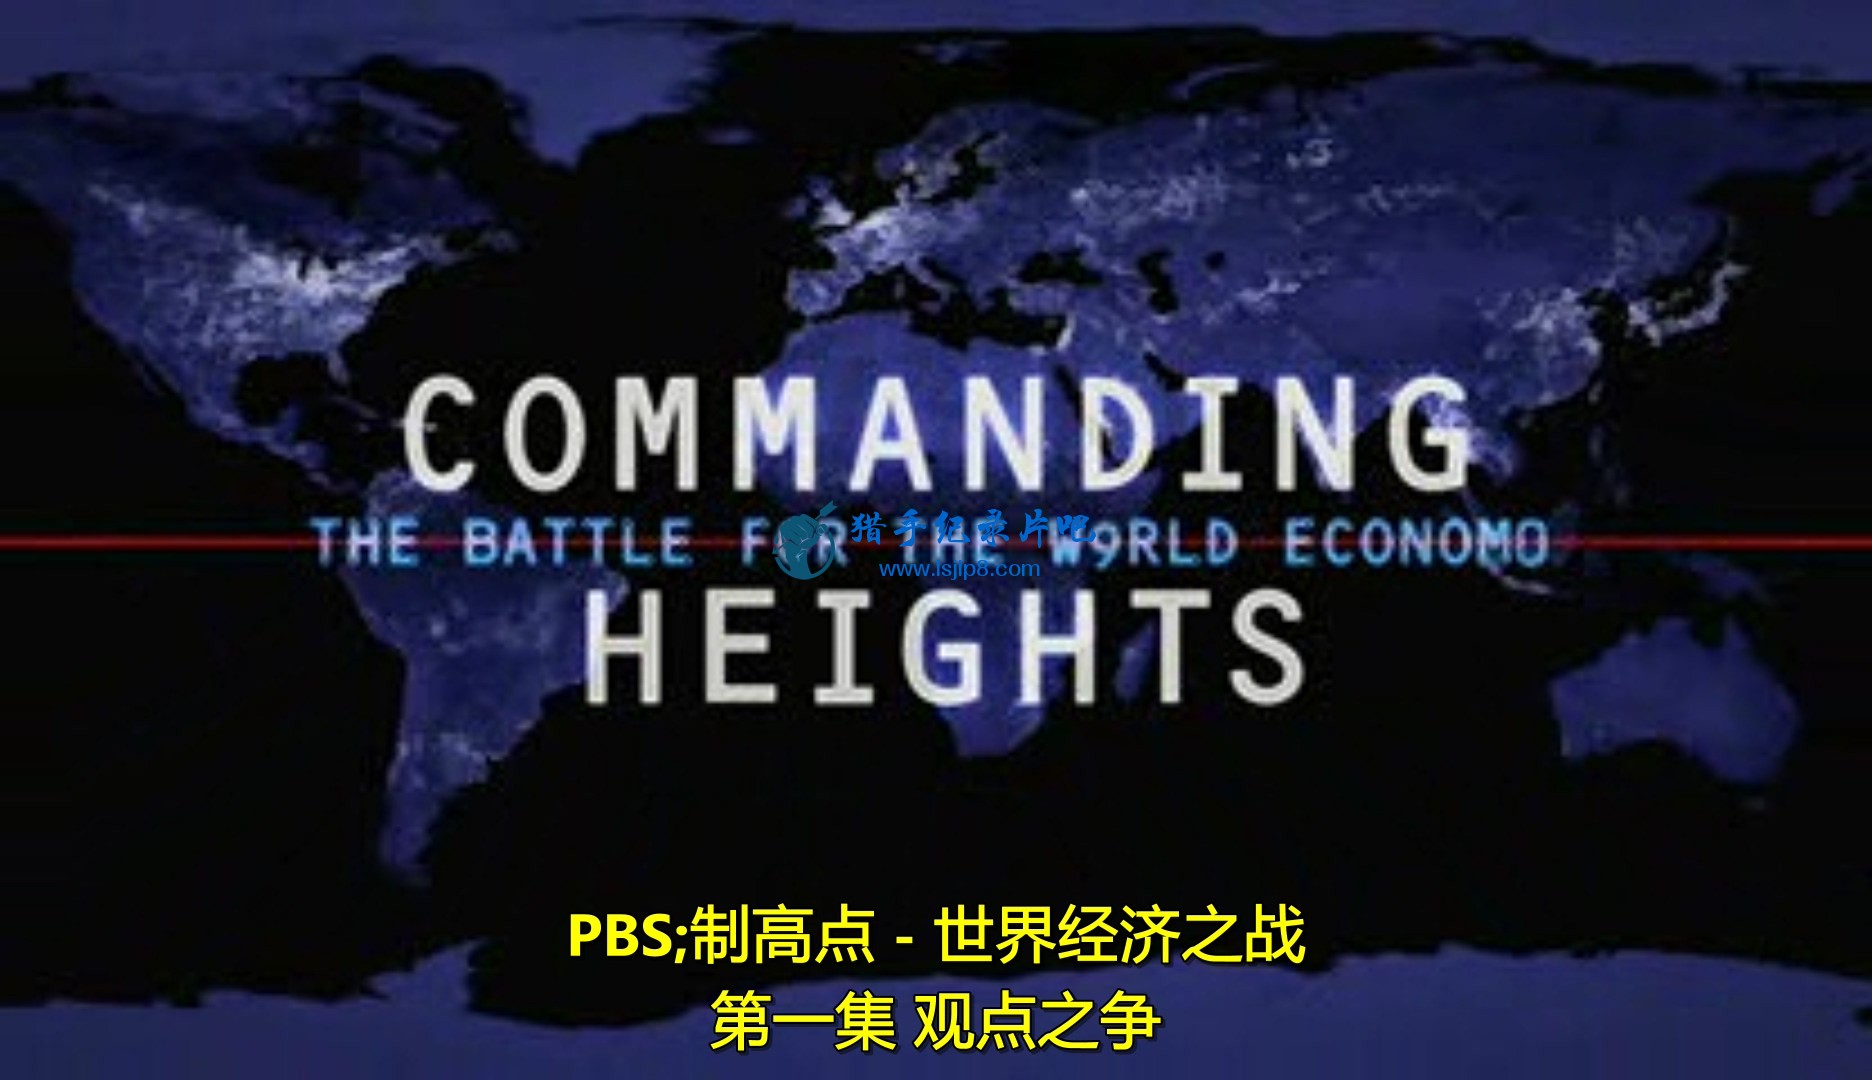 PBS.Commanding.Heights.Ep1.jpg